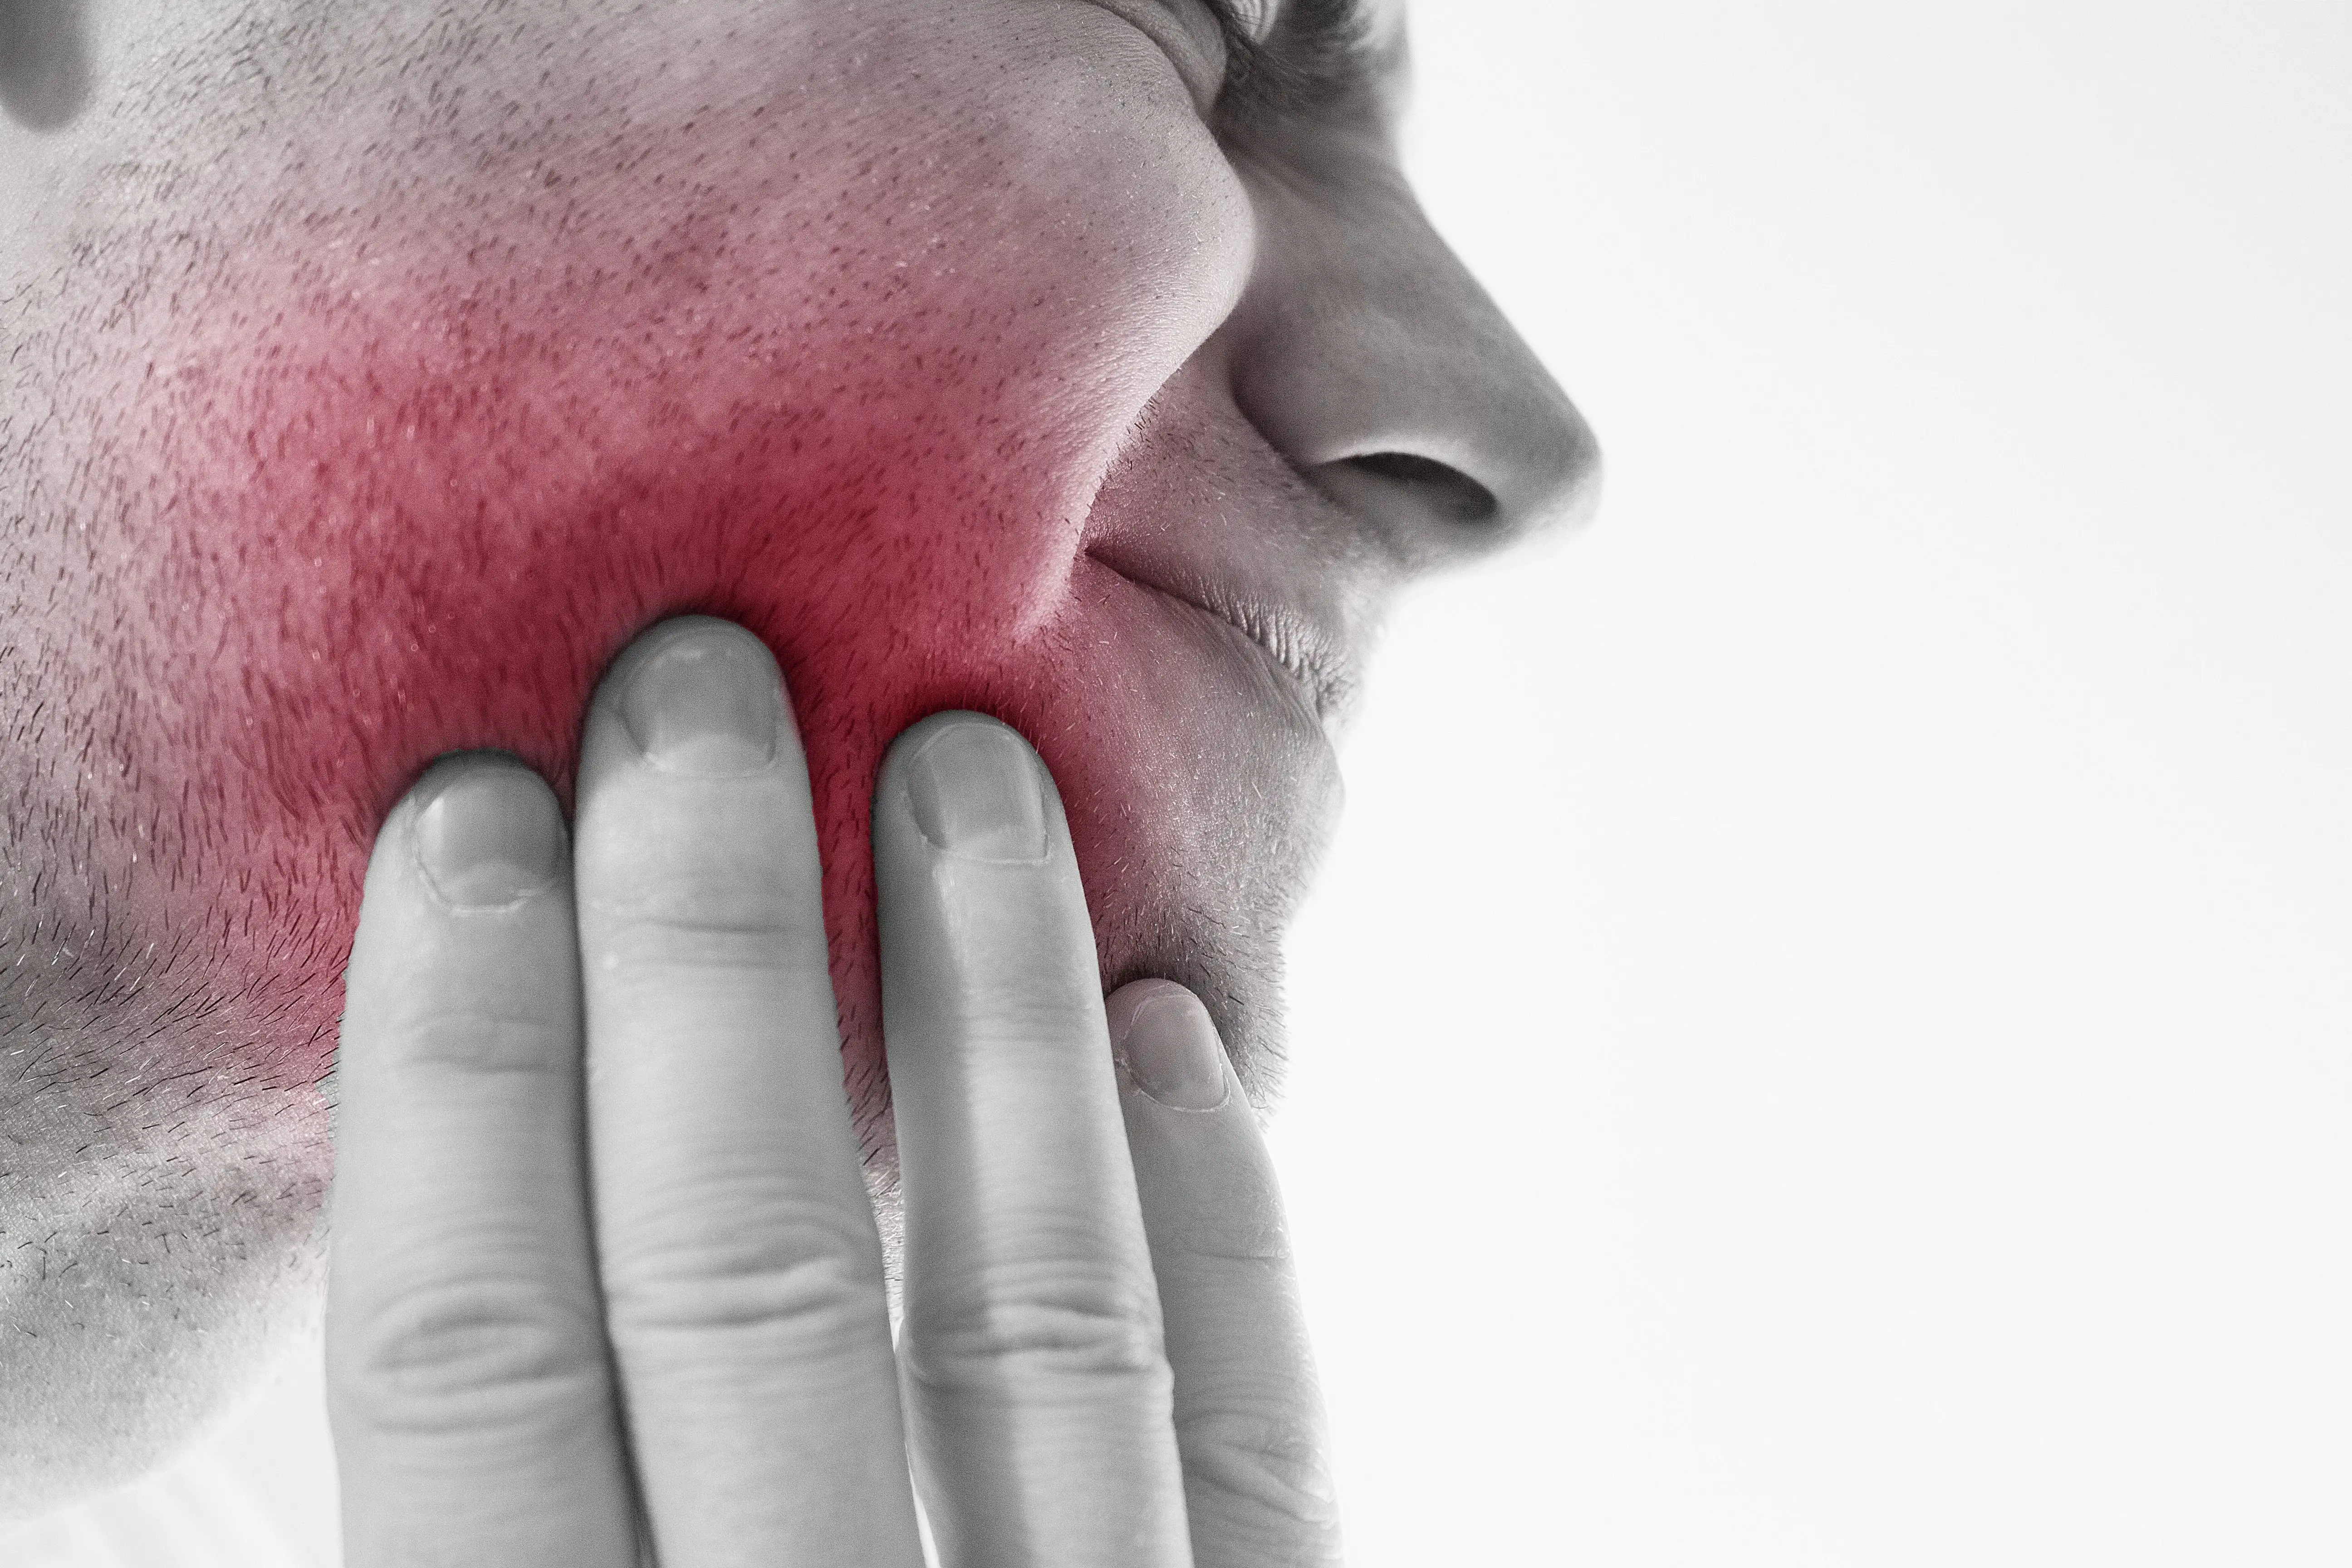 Endodontic pain relief